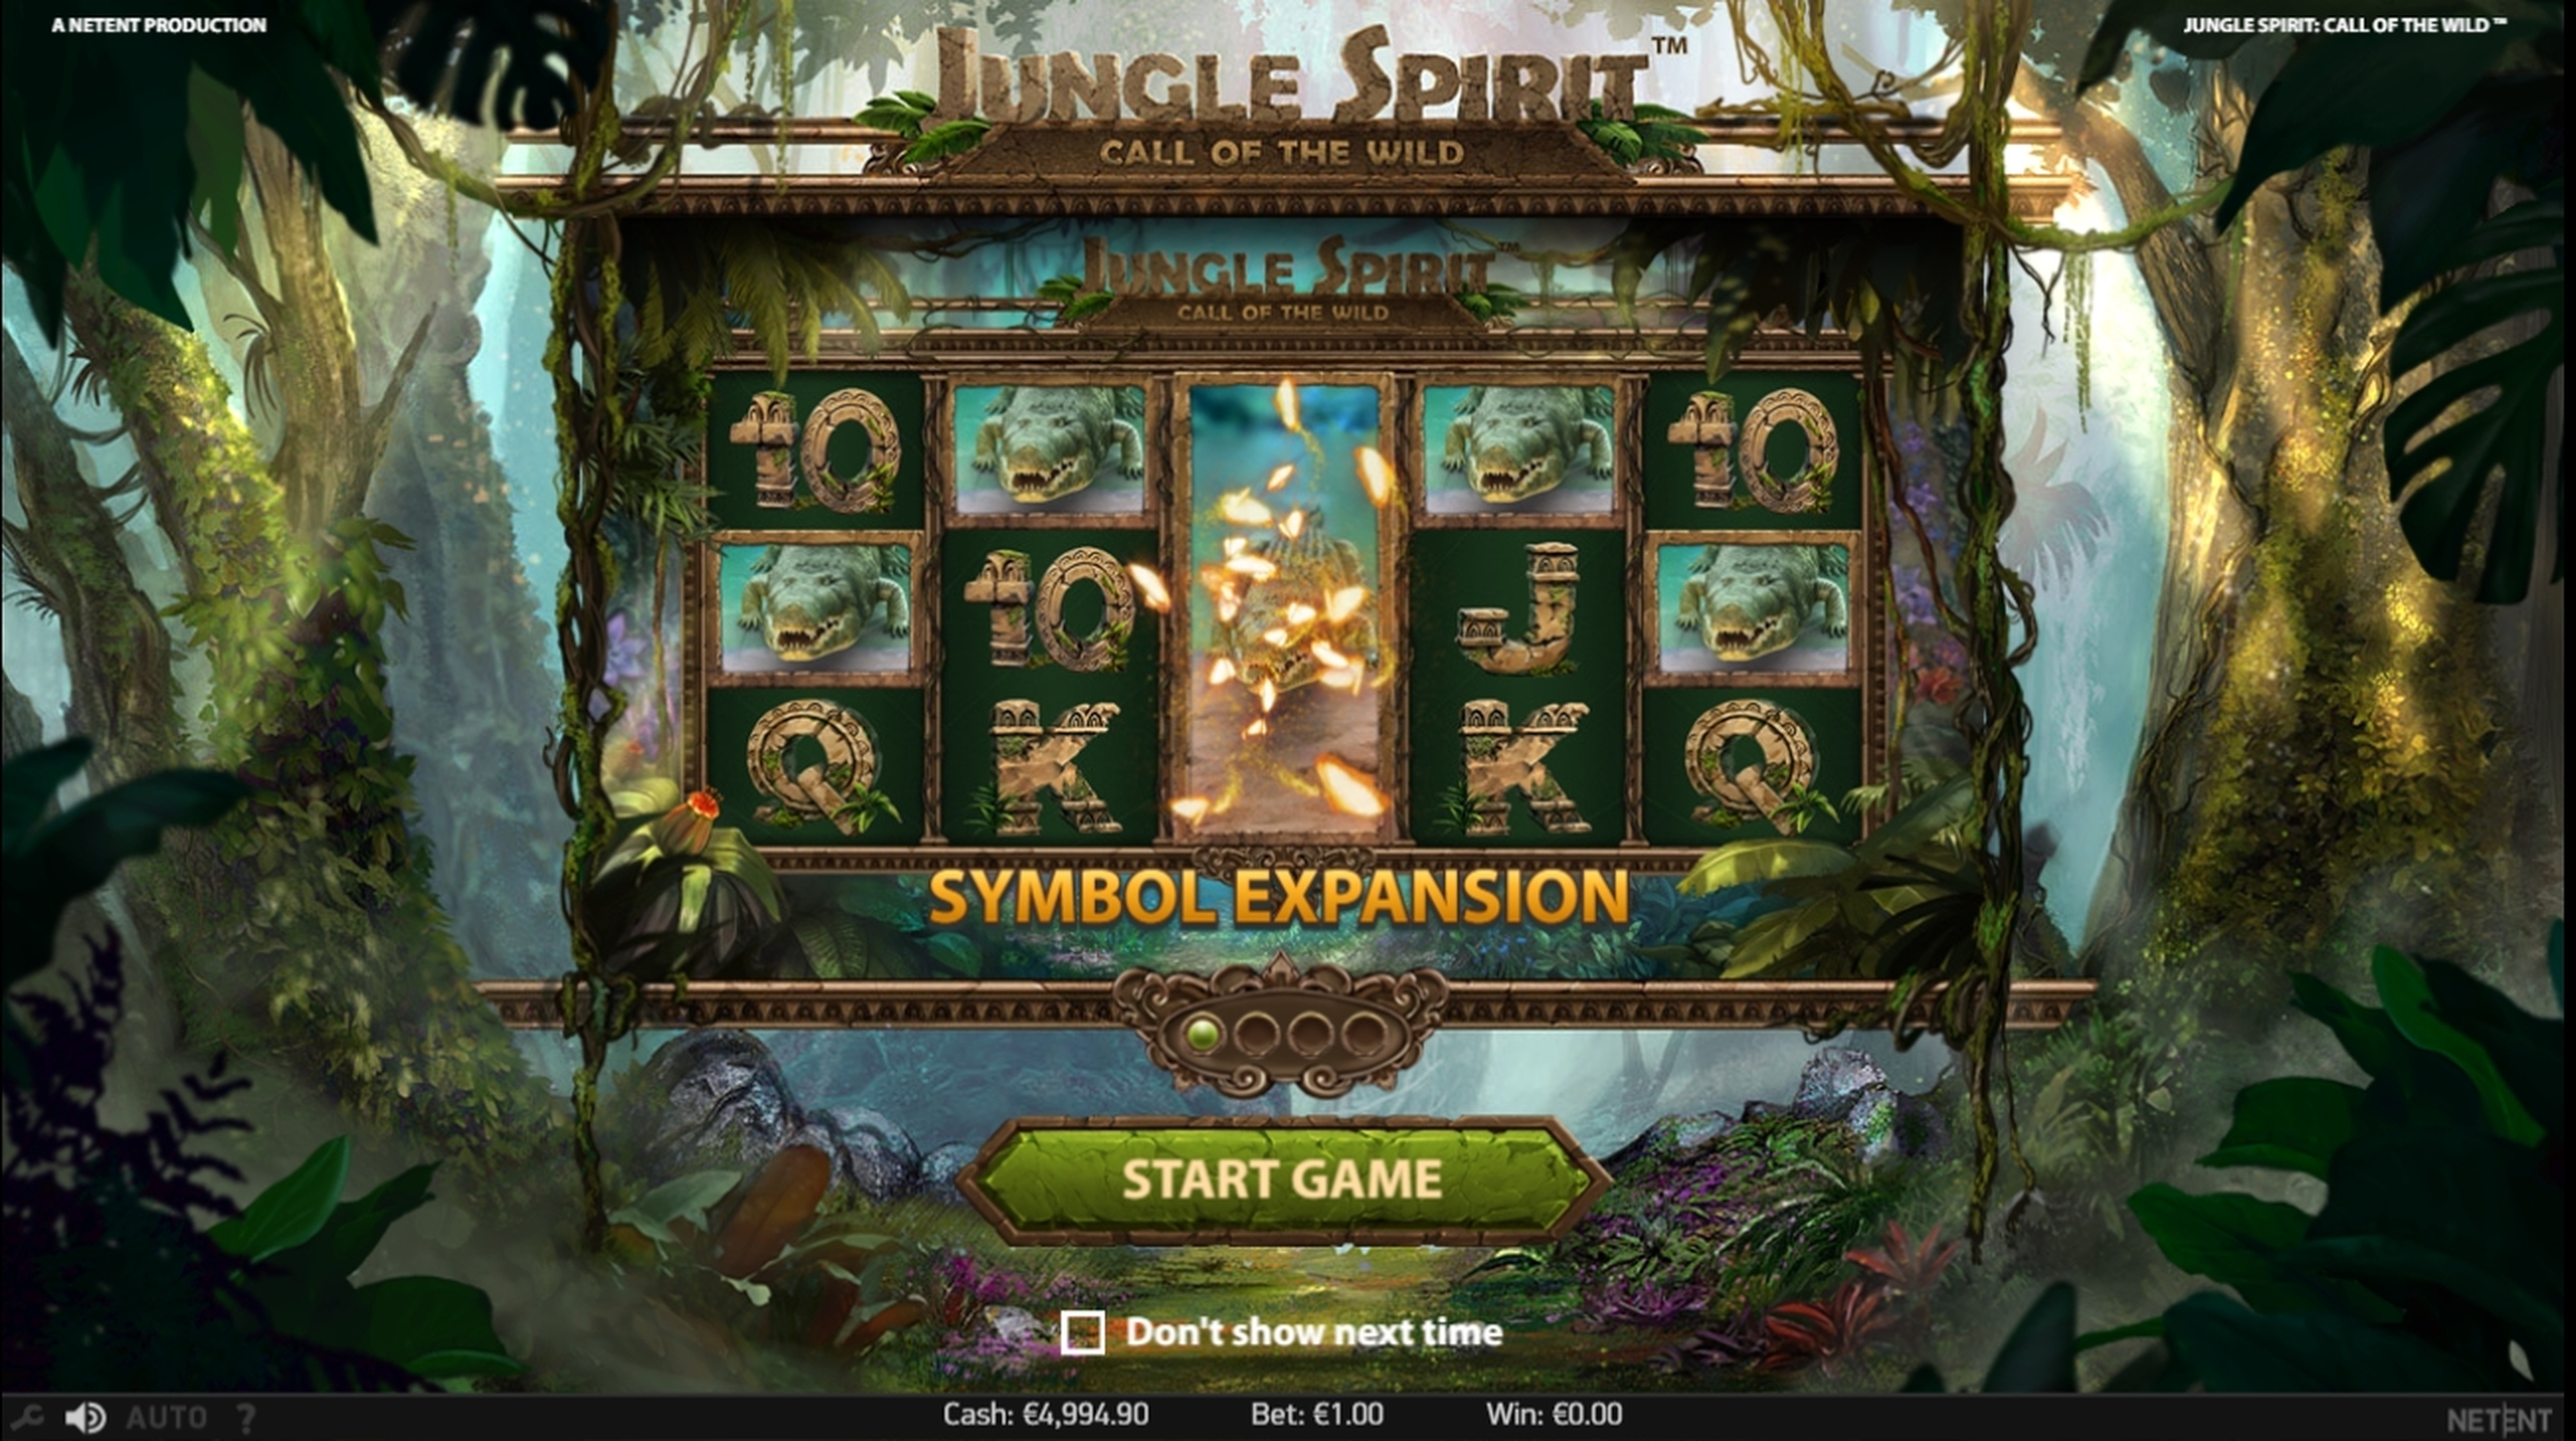 Play Jungle Spirit: Call of the Wild Free Casino Slot Game by NetEnt